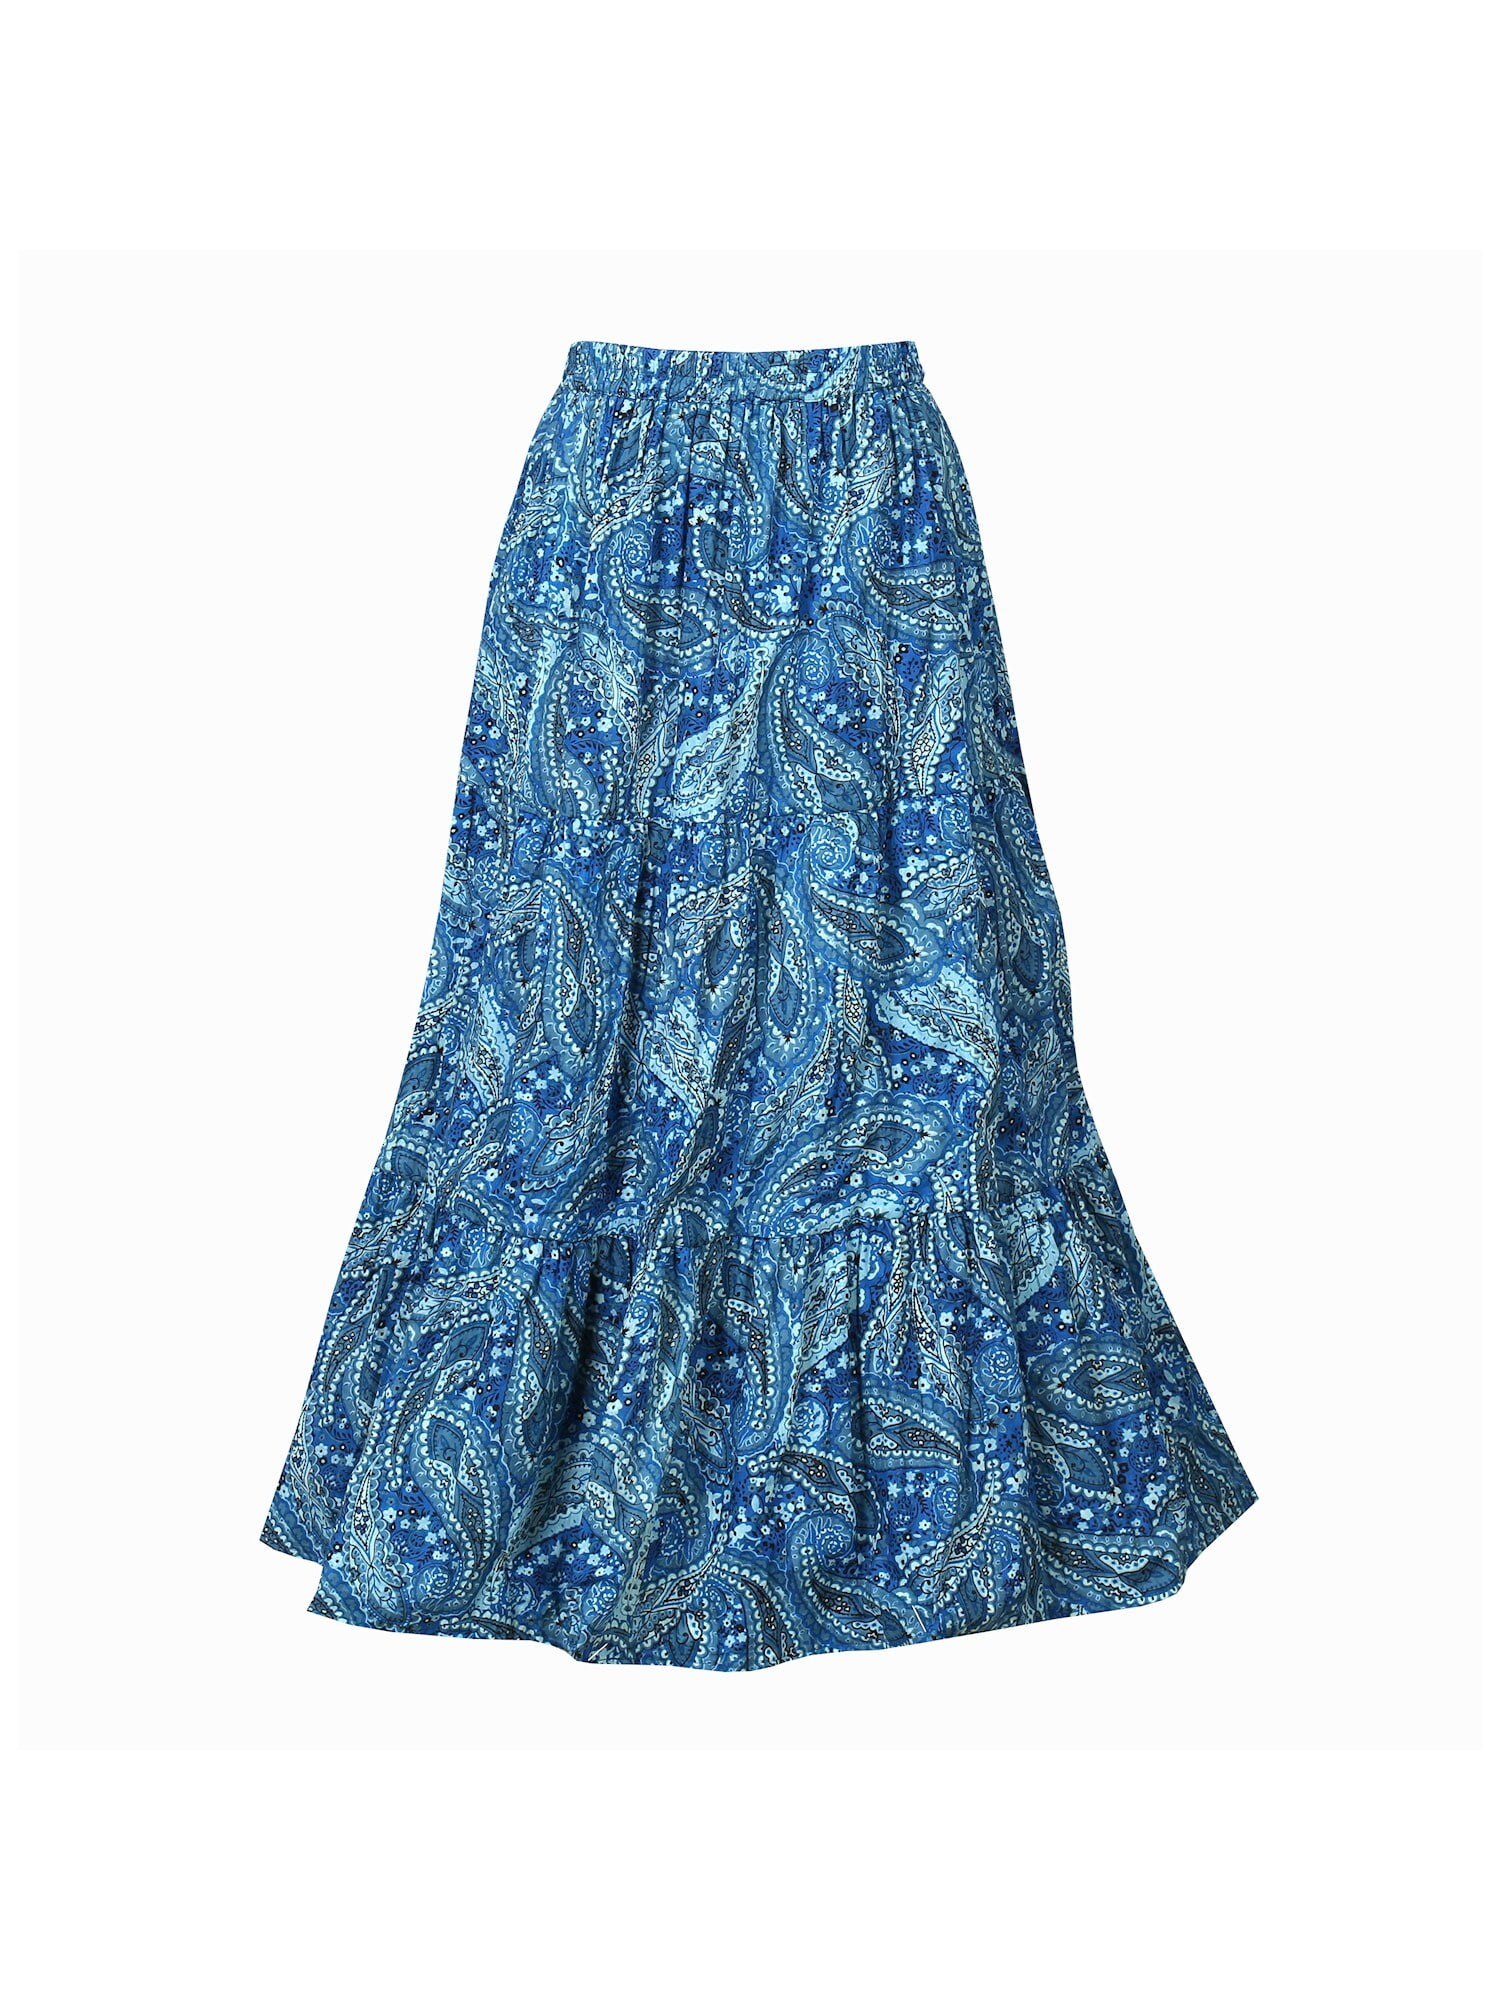 Catalog Classics Women's Reversible Boho Maxi Skirt - Blue Paisley, 1X ...